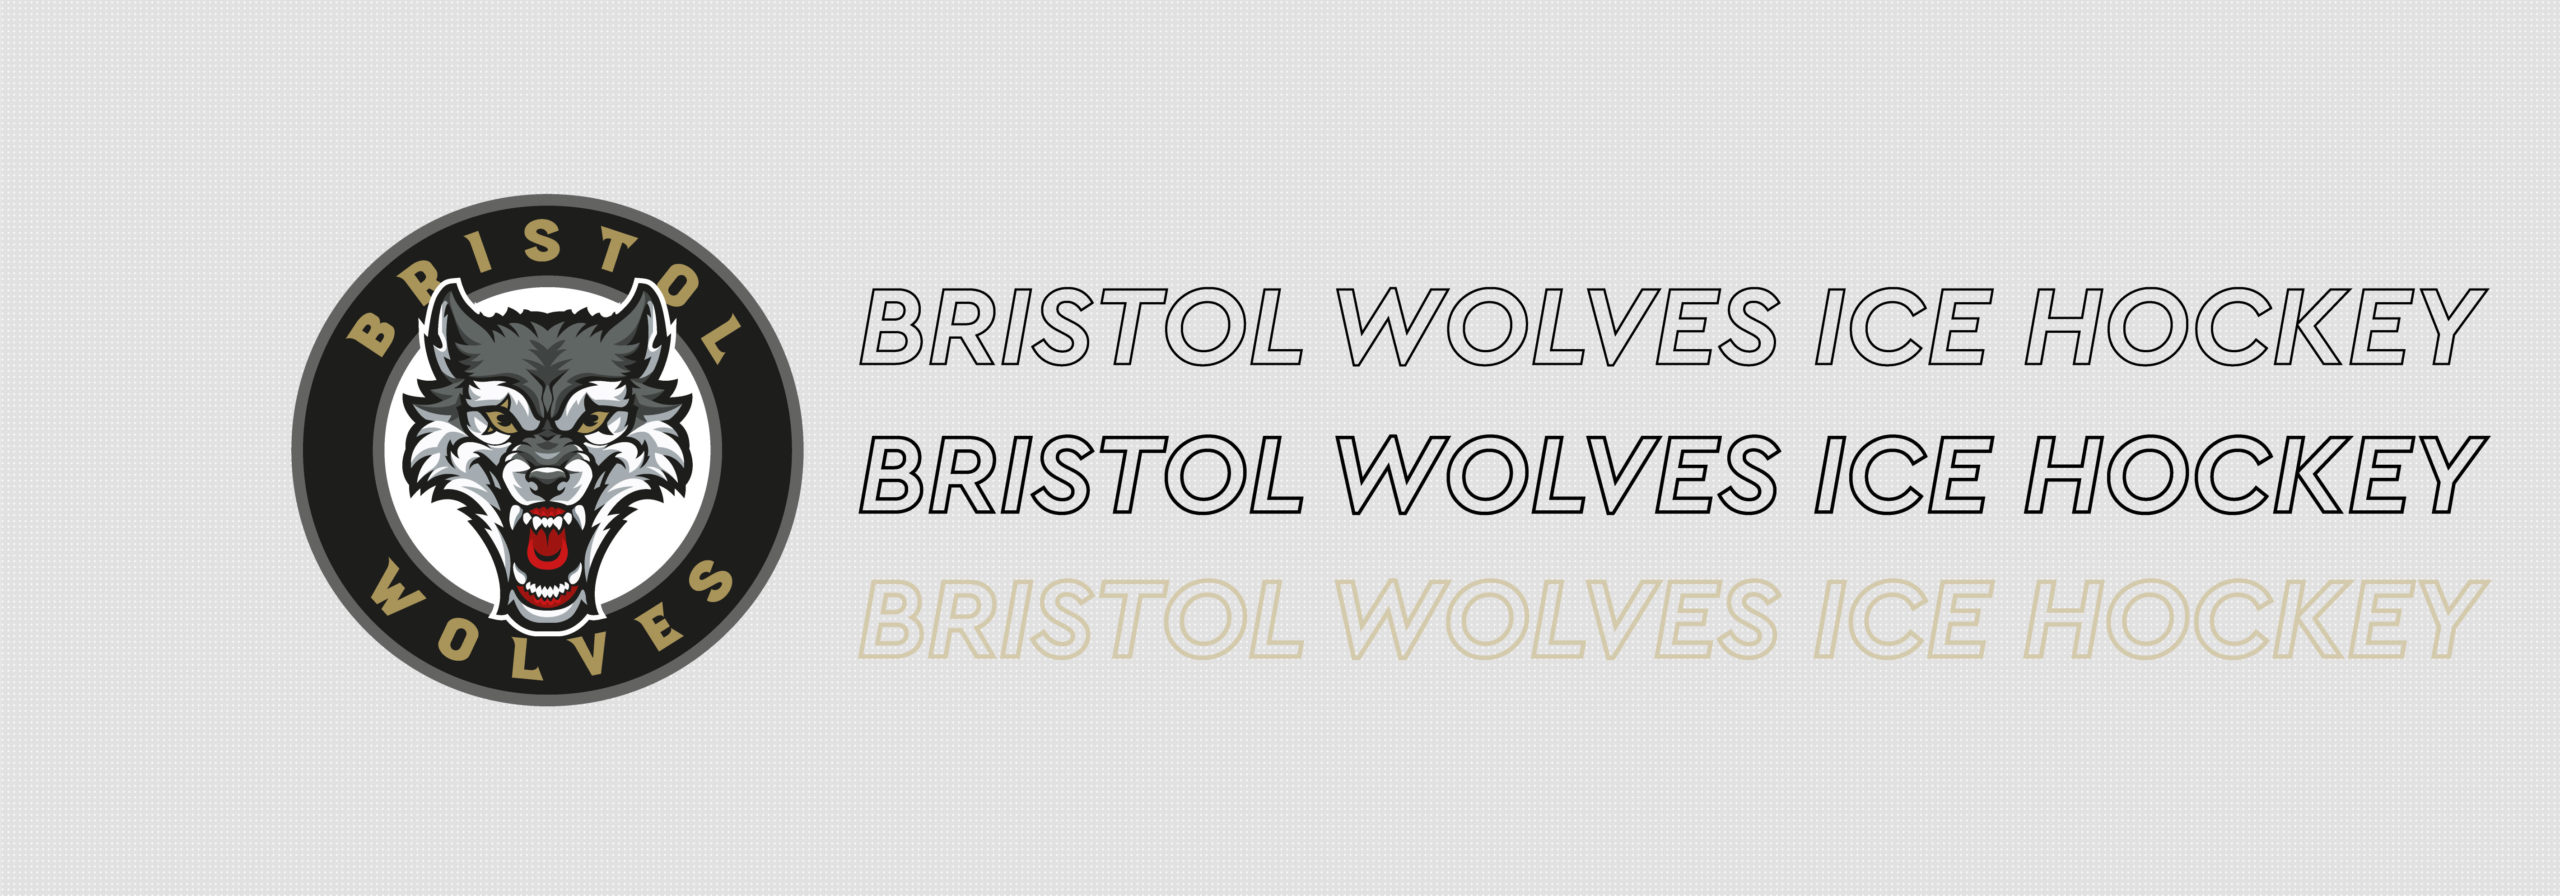 Bristol Wolves Replica Toiletry Bag